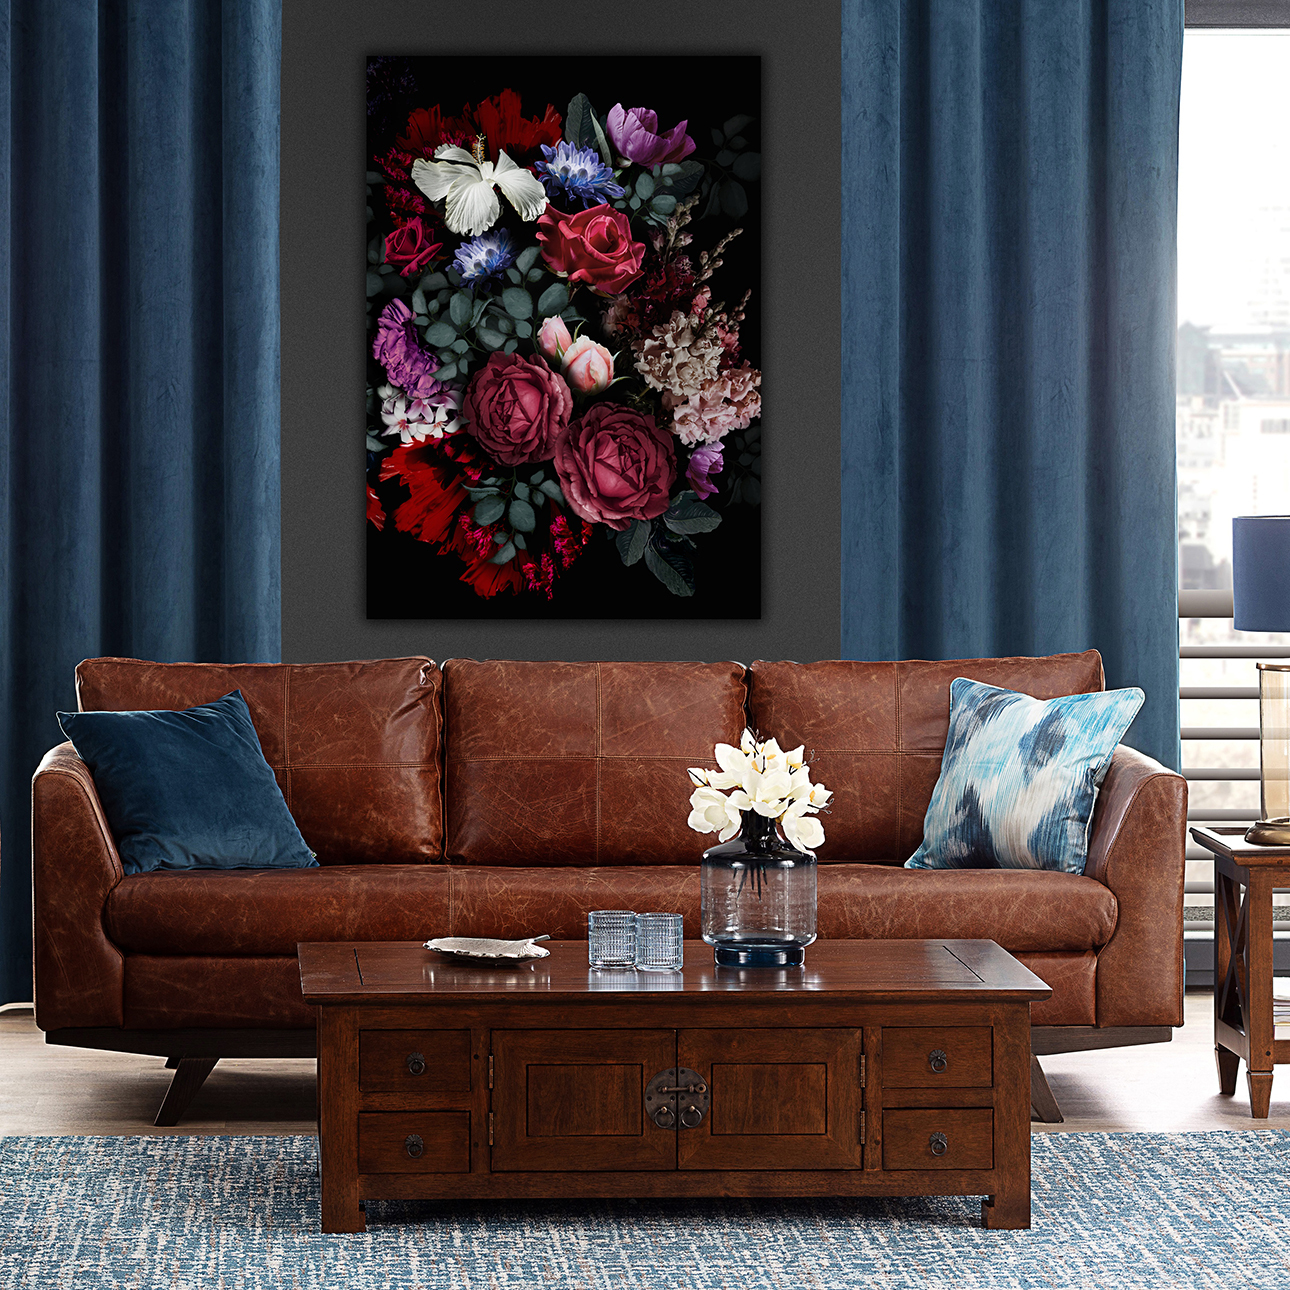 Leinwandbild Flowers II, 70 x 100 cm günstig online kaufen